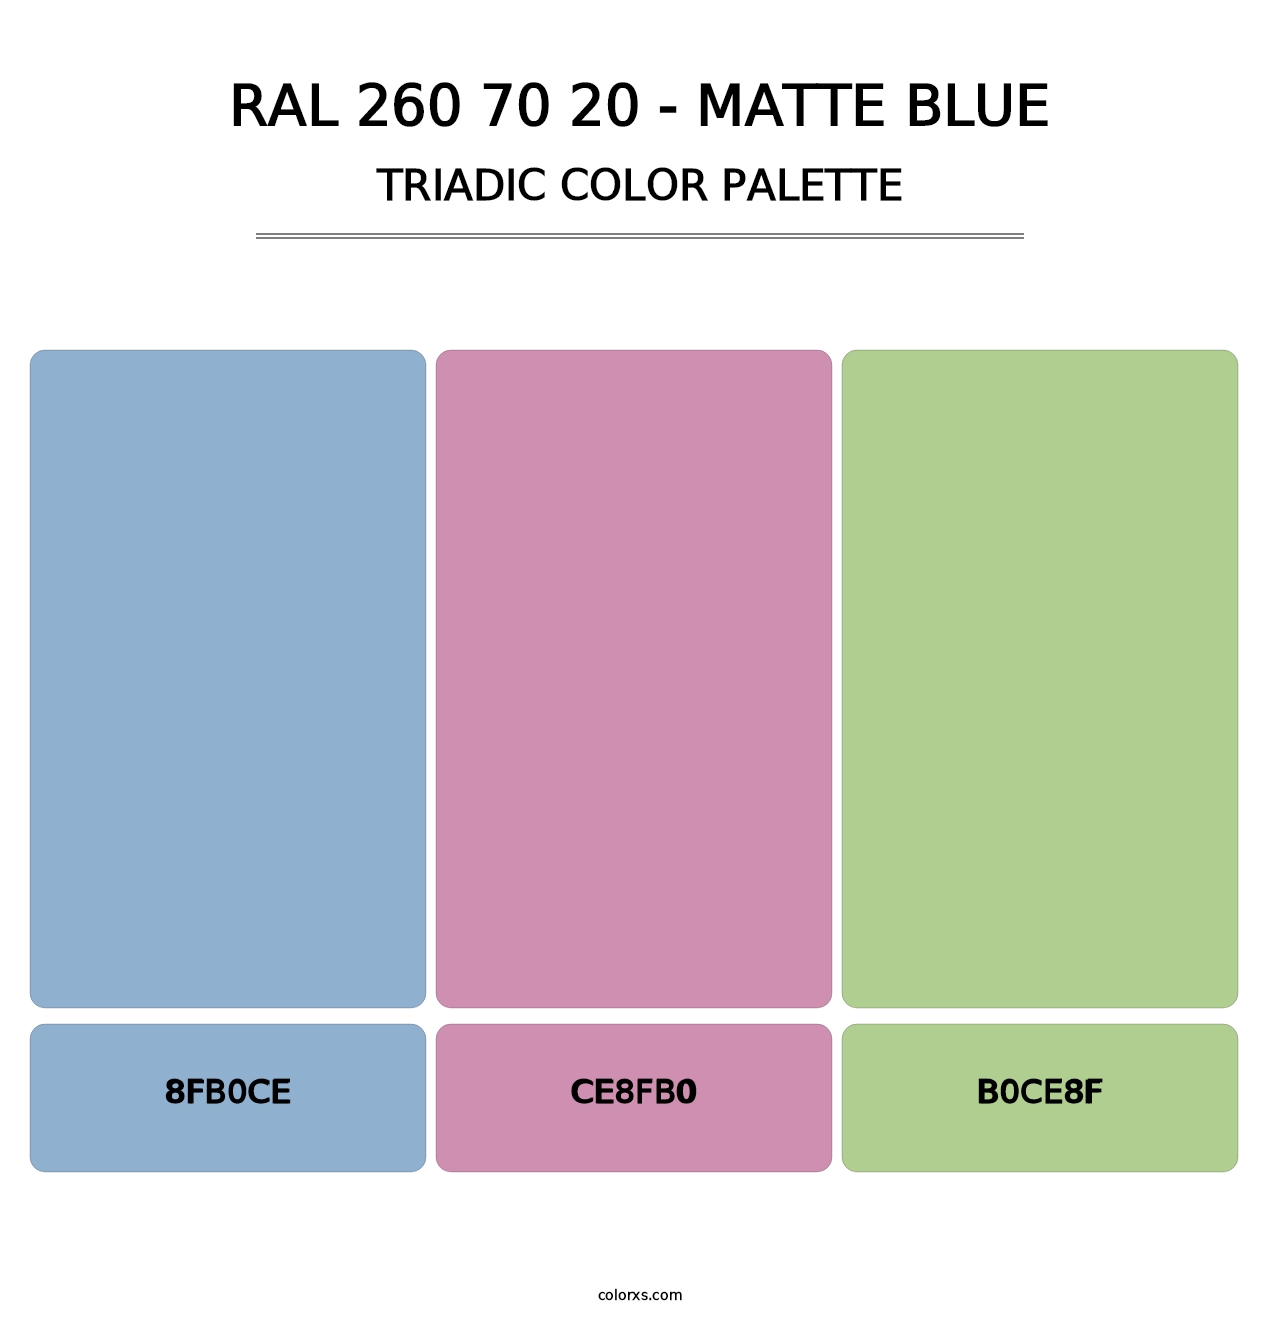 RAL 260 70 20 - Matte Blue - Triadic Color Palette